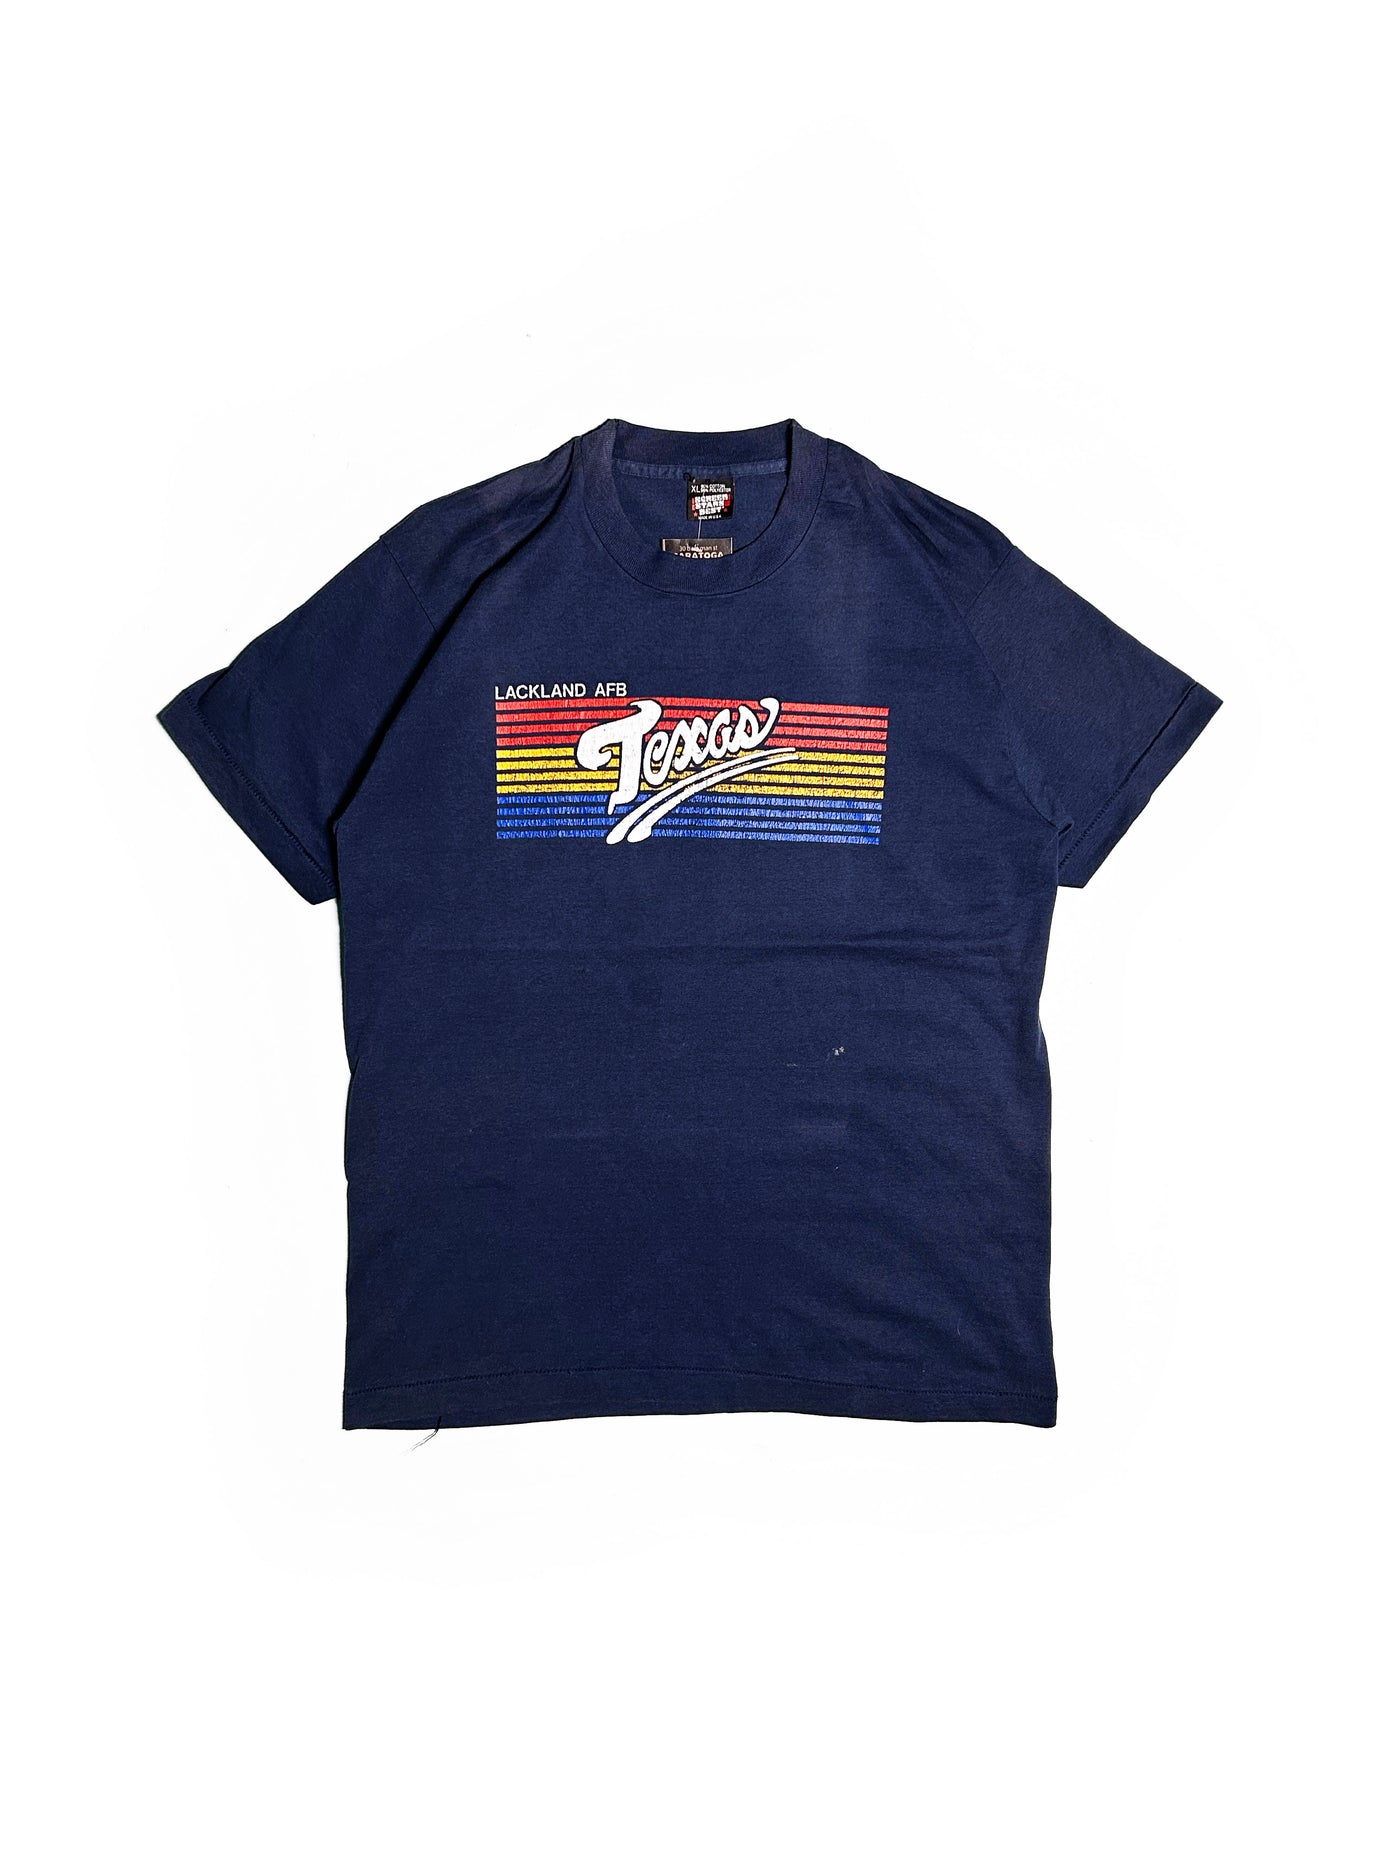 Vintage 90s Lackland Air Force Base Texas T-Shirt